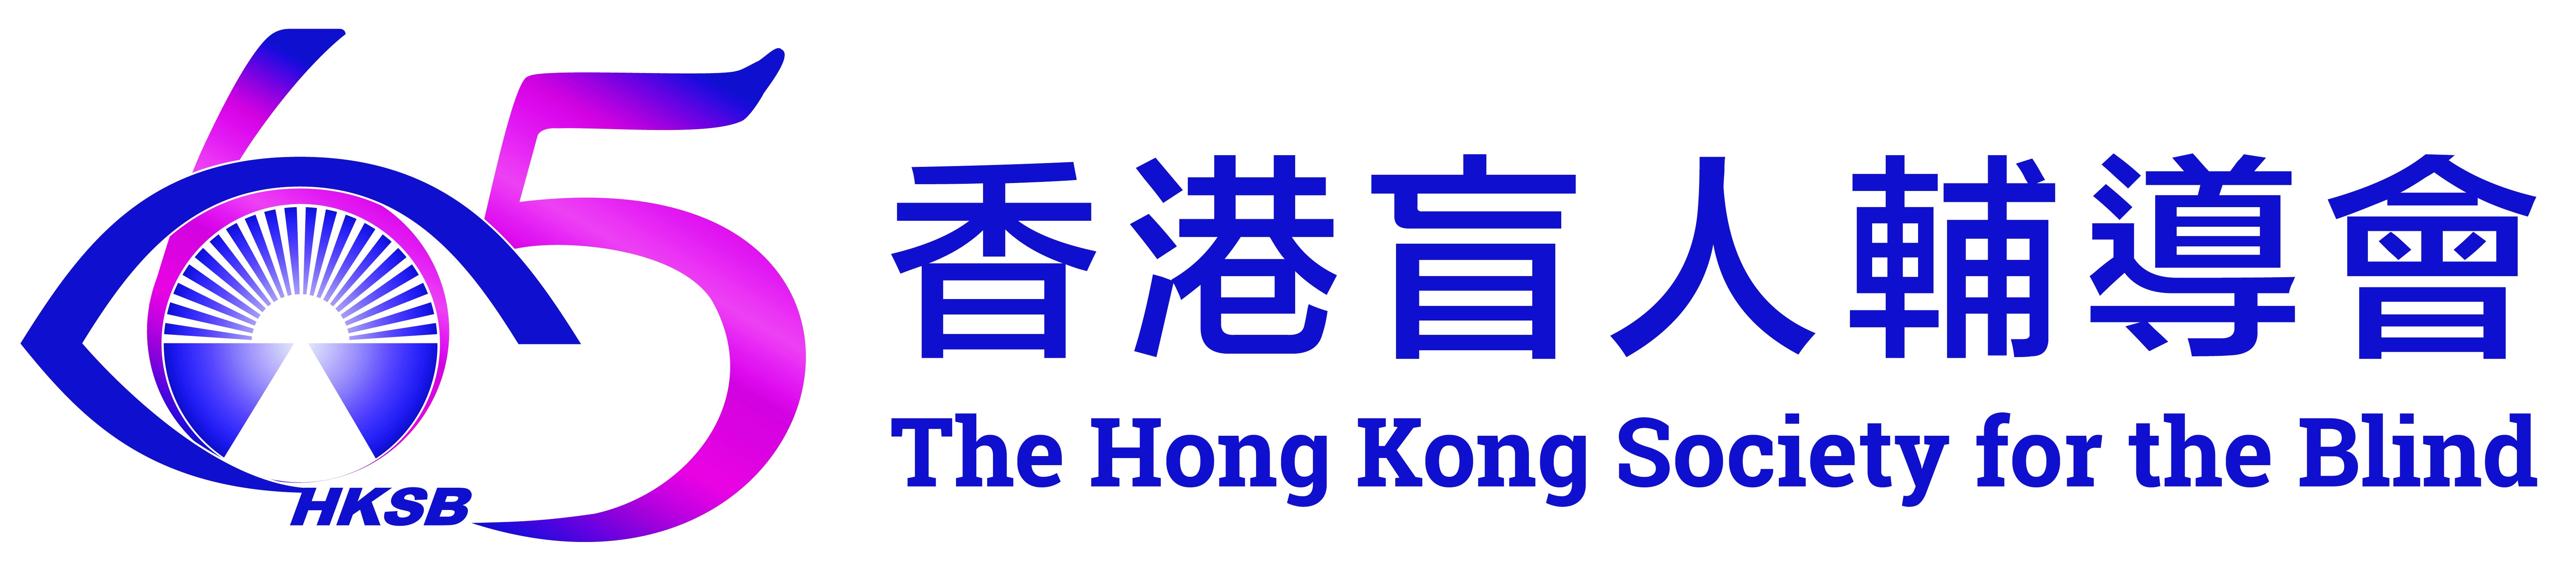 65th HKSB_Logo_Bilingual_Horizontal (ai)